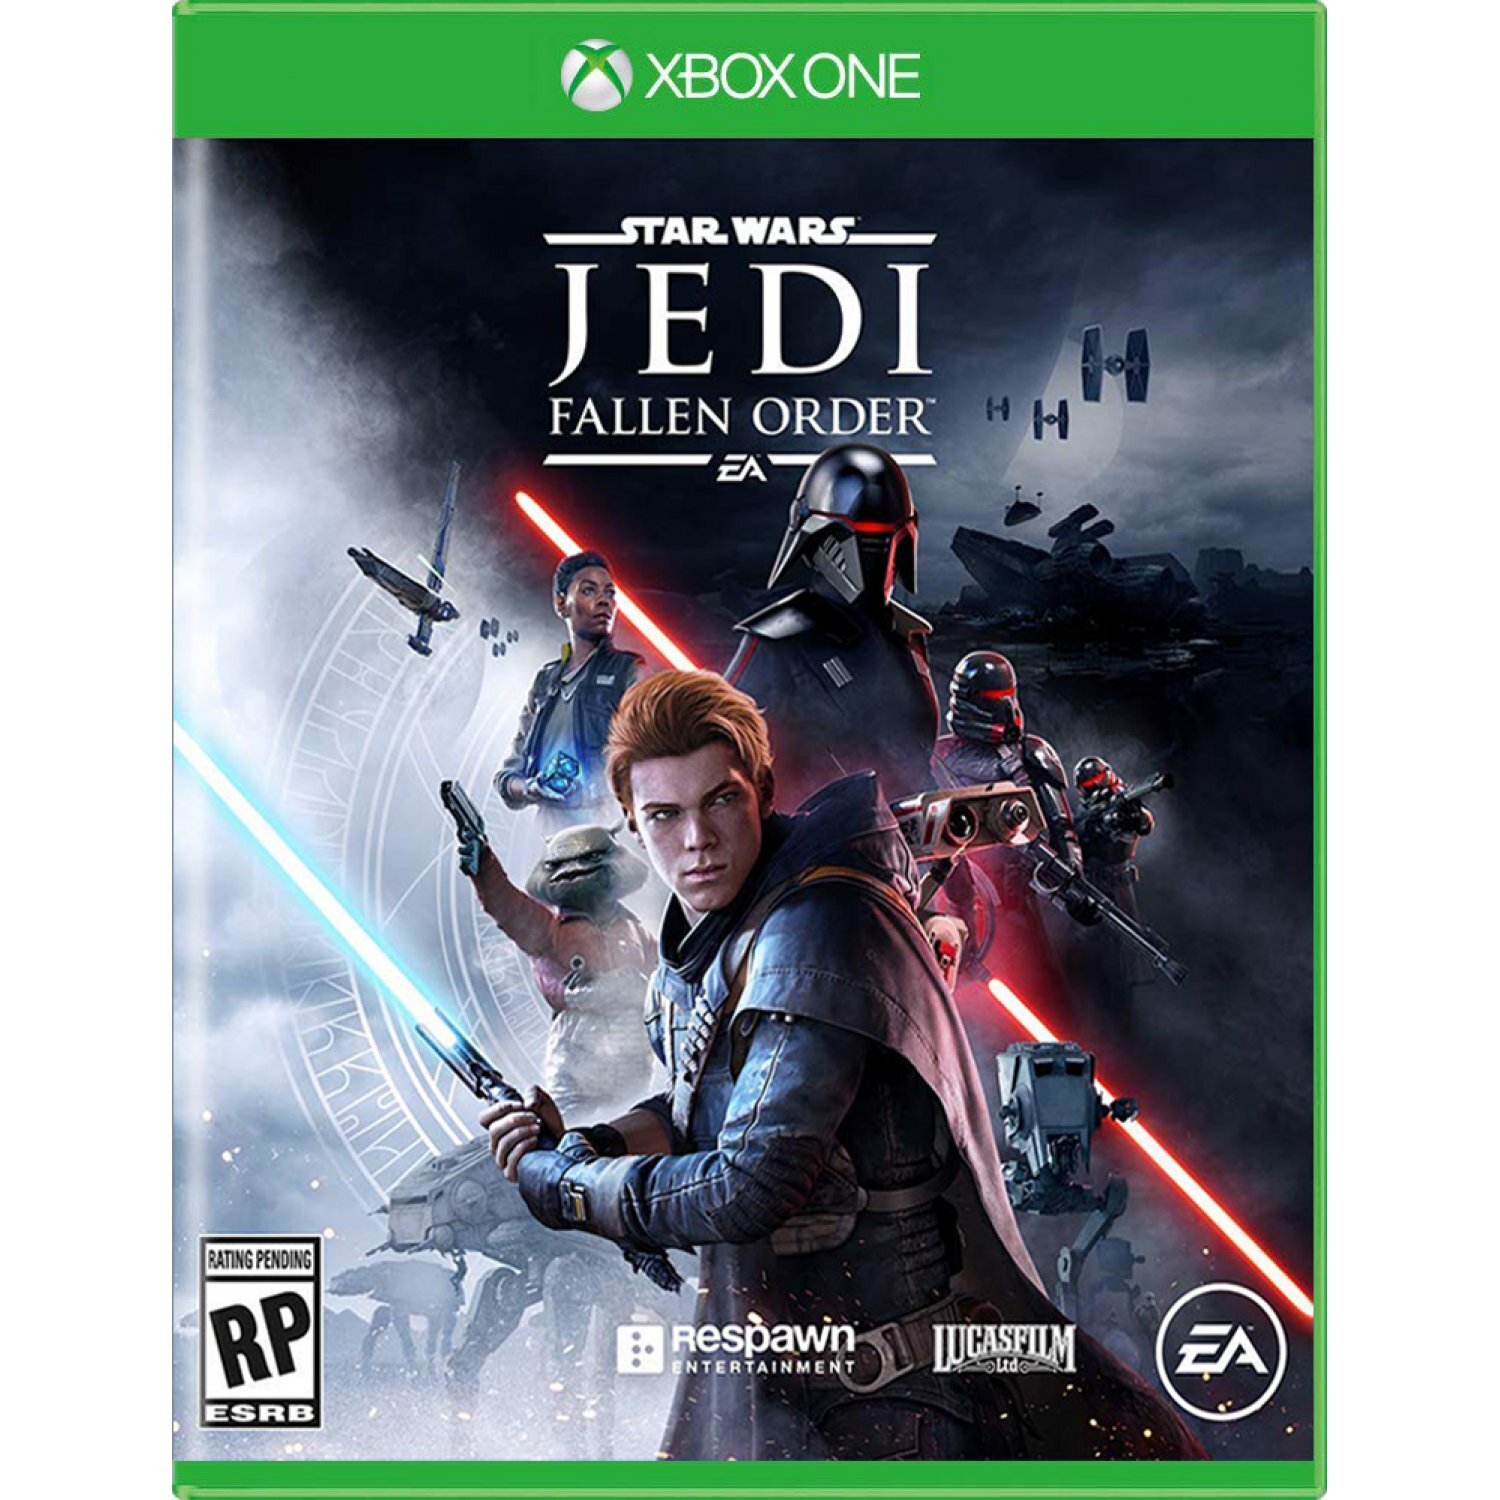 Electronic Arts JEU CONSOLE STAR WARS JEDI: GEVALLEN BESTEL 1055071 Xbox One